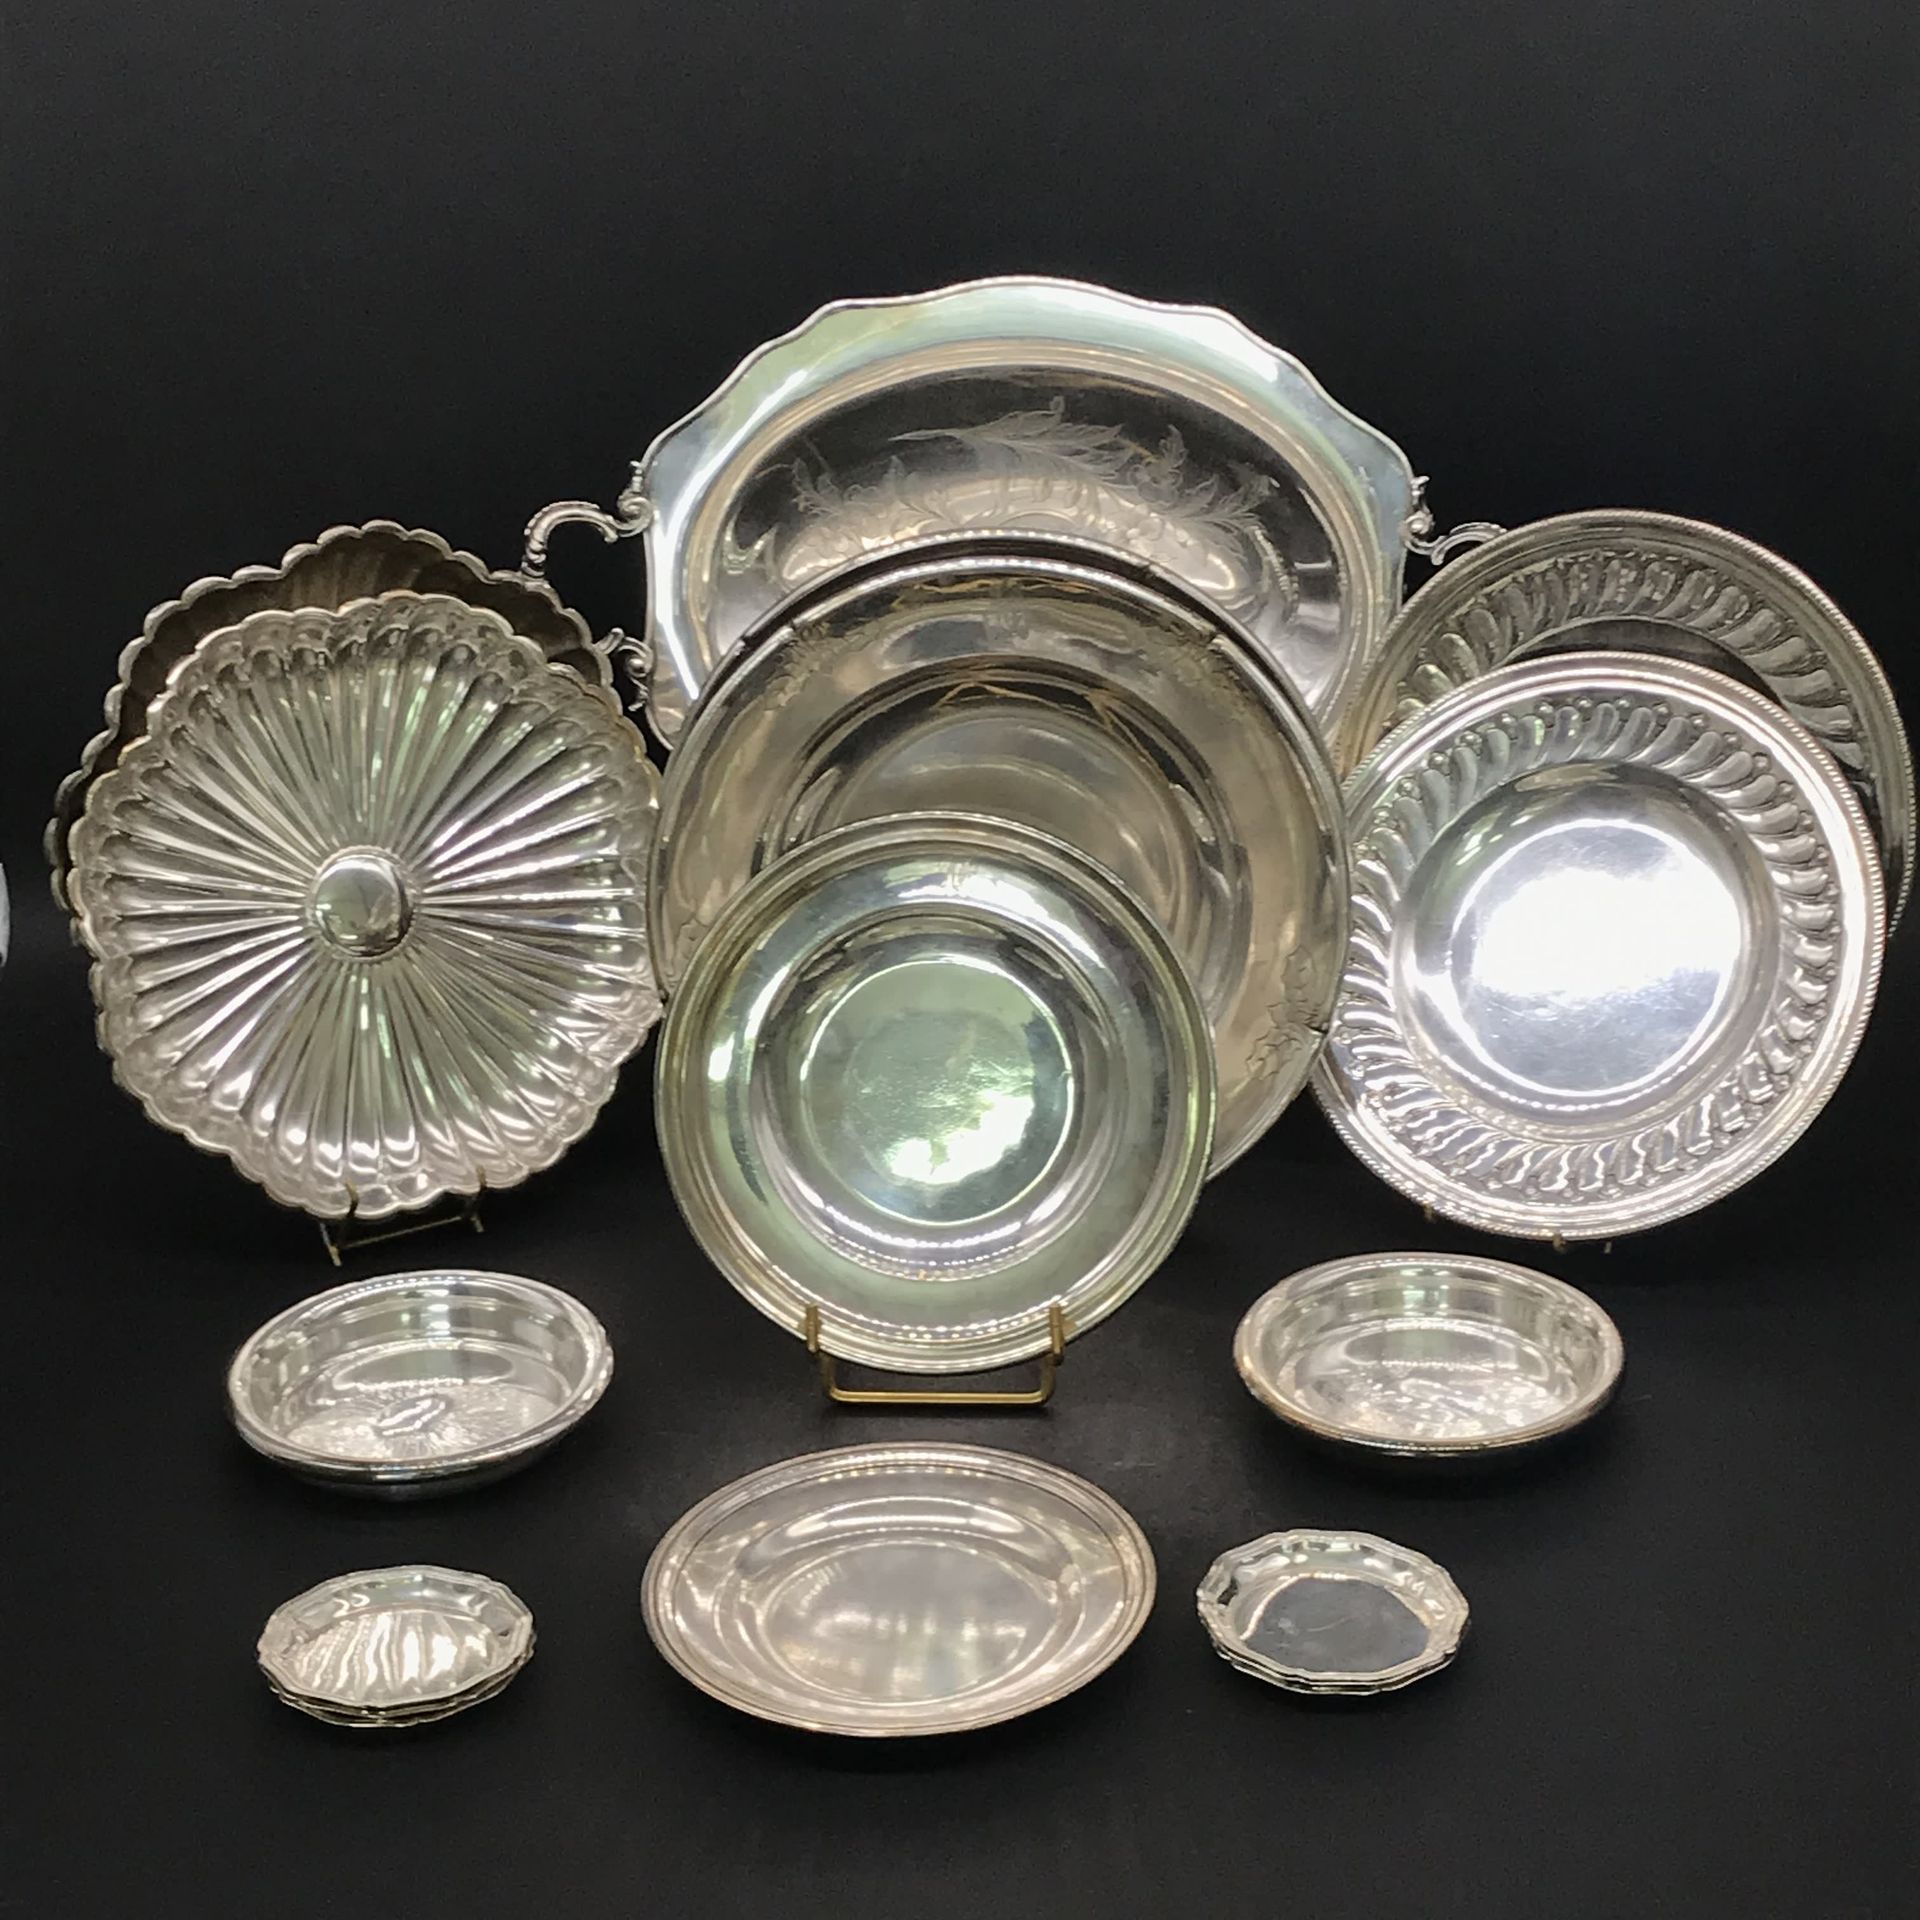 Null 镀银很多，包括:

三对盘子，两个杯垫，一个带数字的盘子，一个碟子，六个碗和一个带腿的演示托盘。

Christofle家的几件作品。